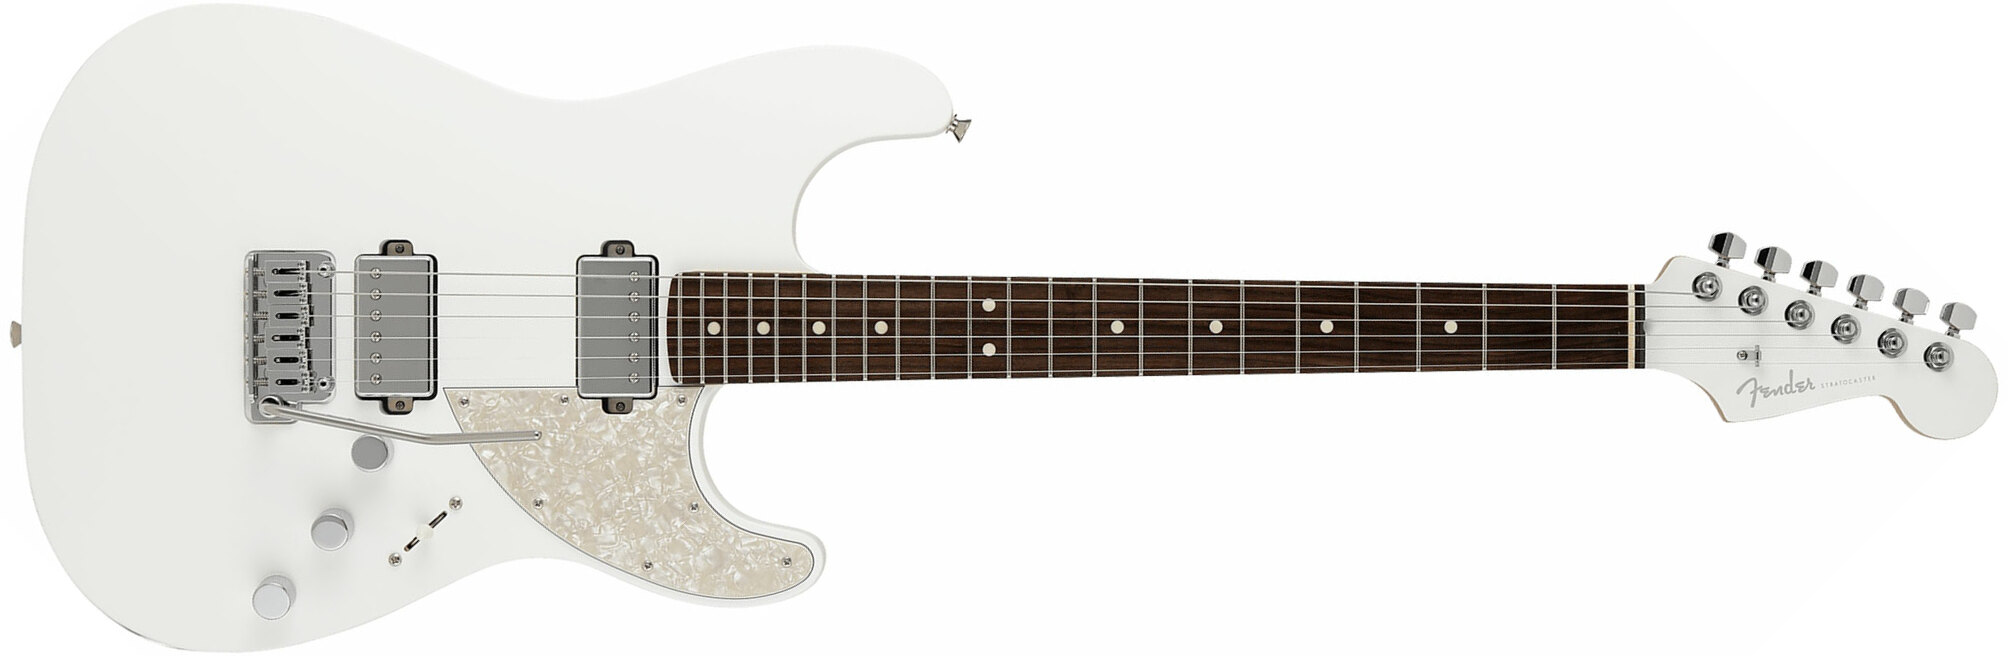 Fender Strat Elemental Mij Jap 2h Trem Rw - Nimbus White - E-Gitarre in Str-Form - Main picture